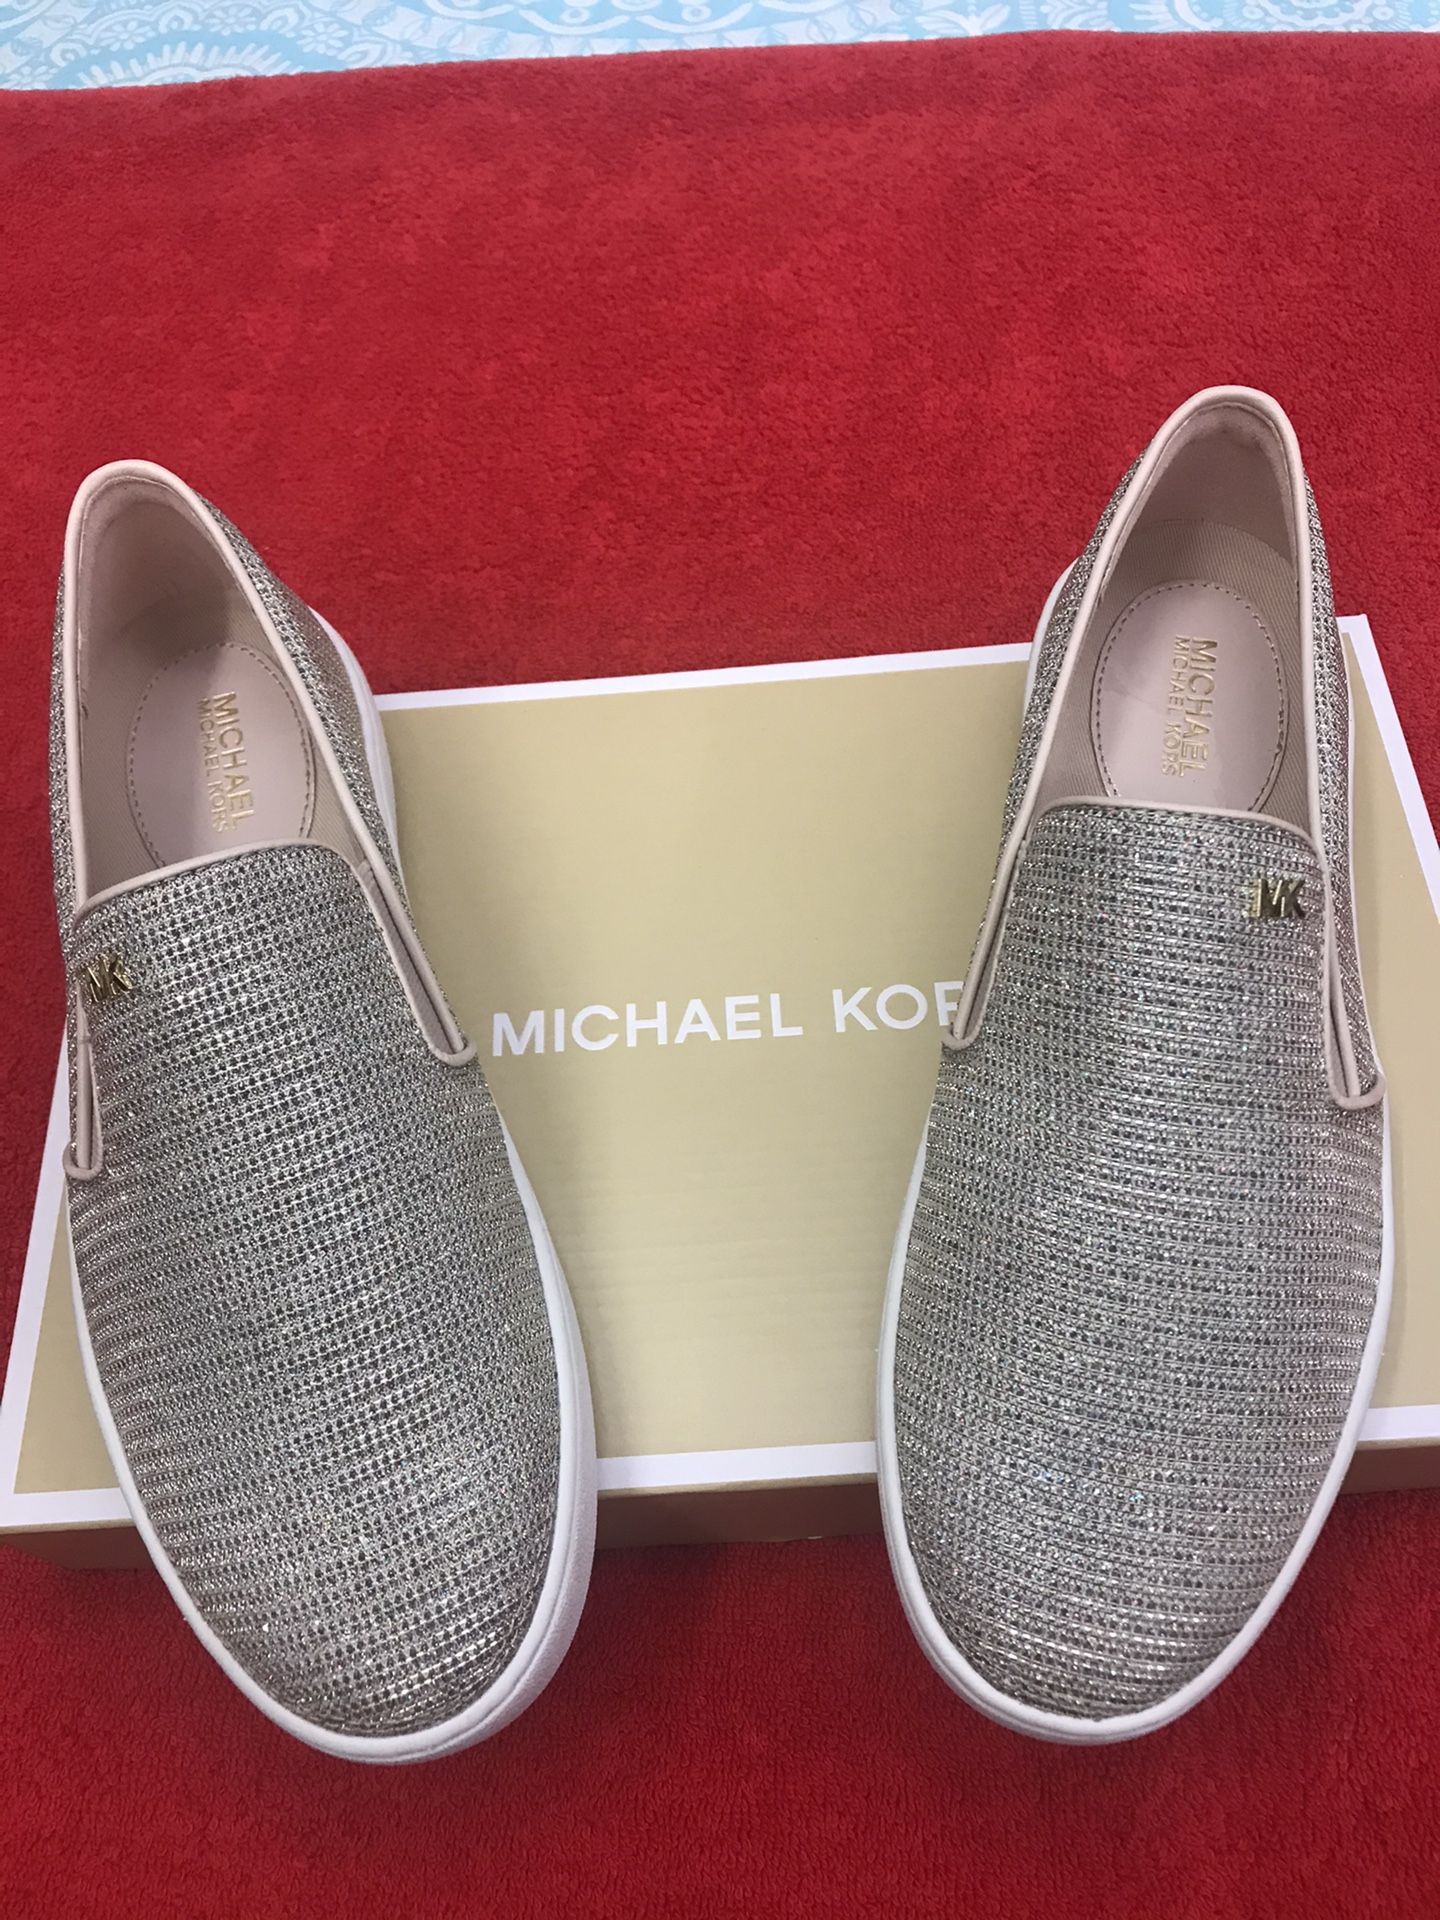 Michael Kors women sneakers